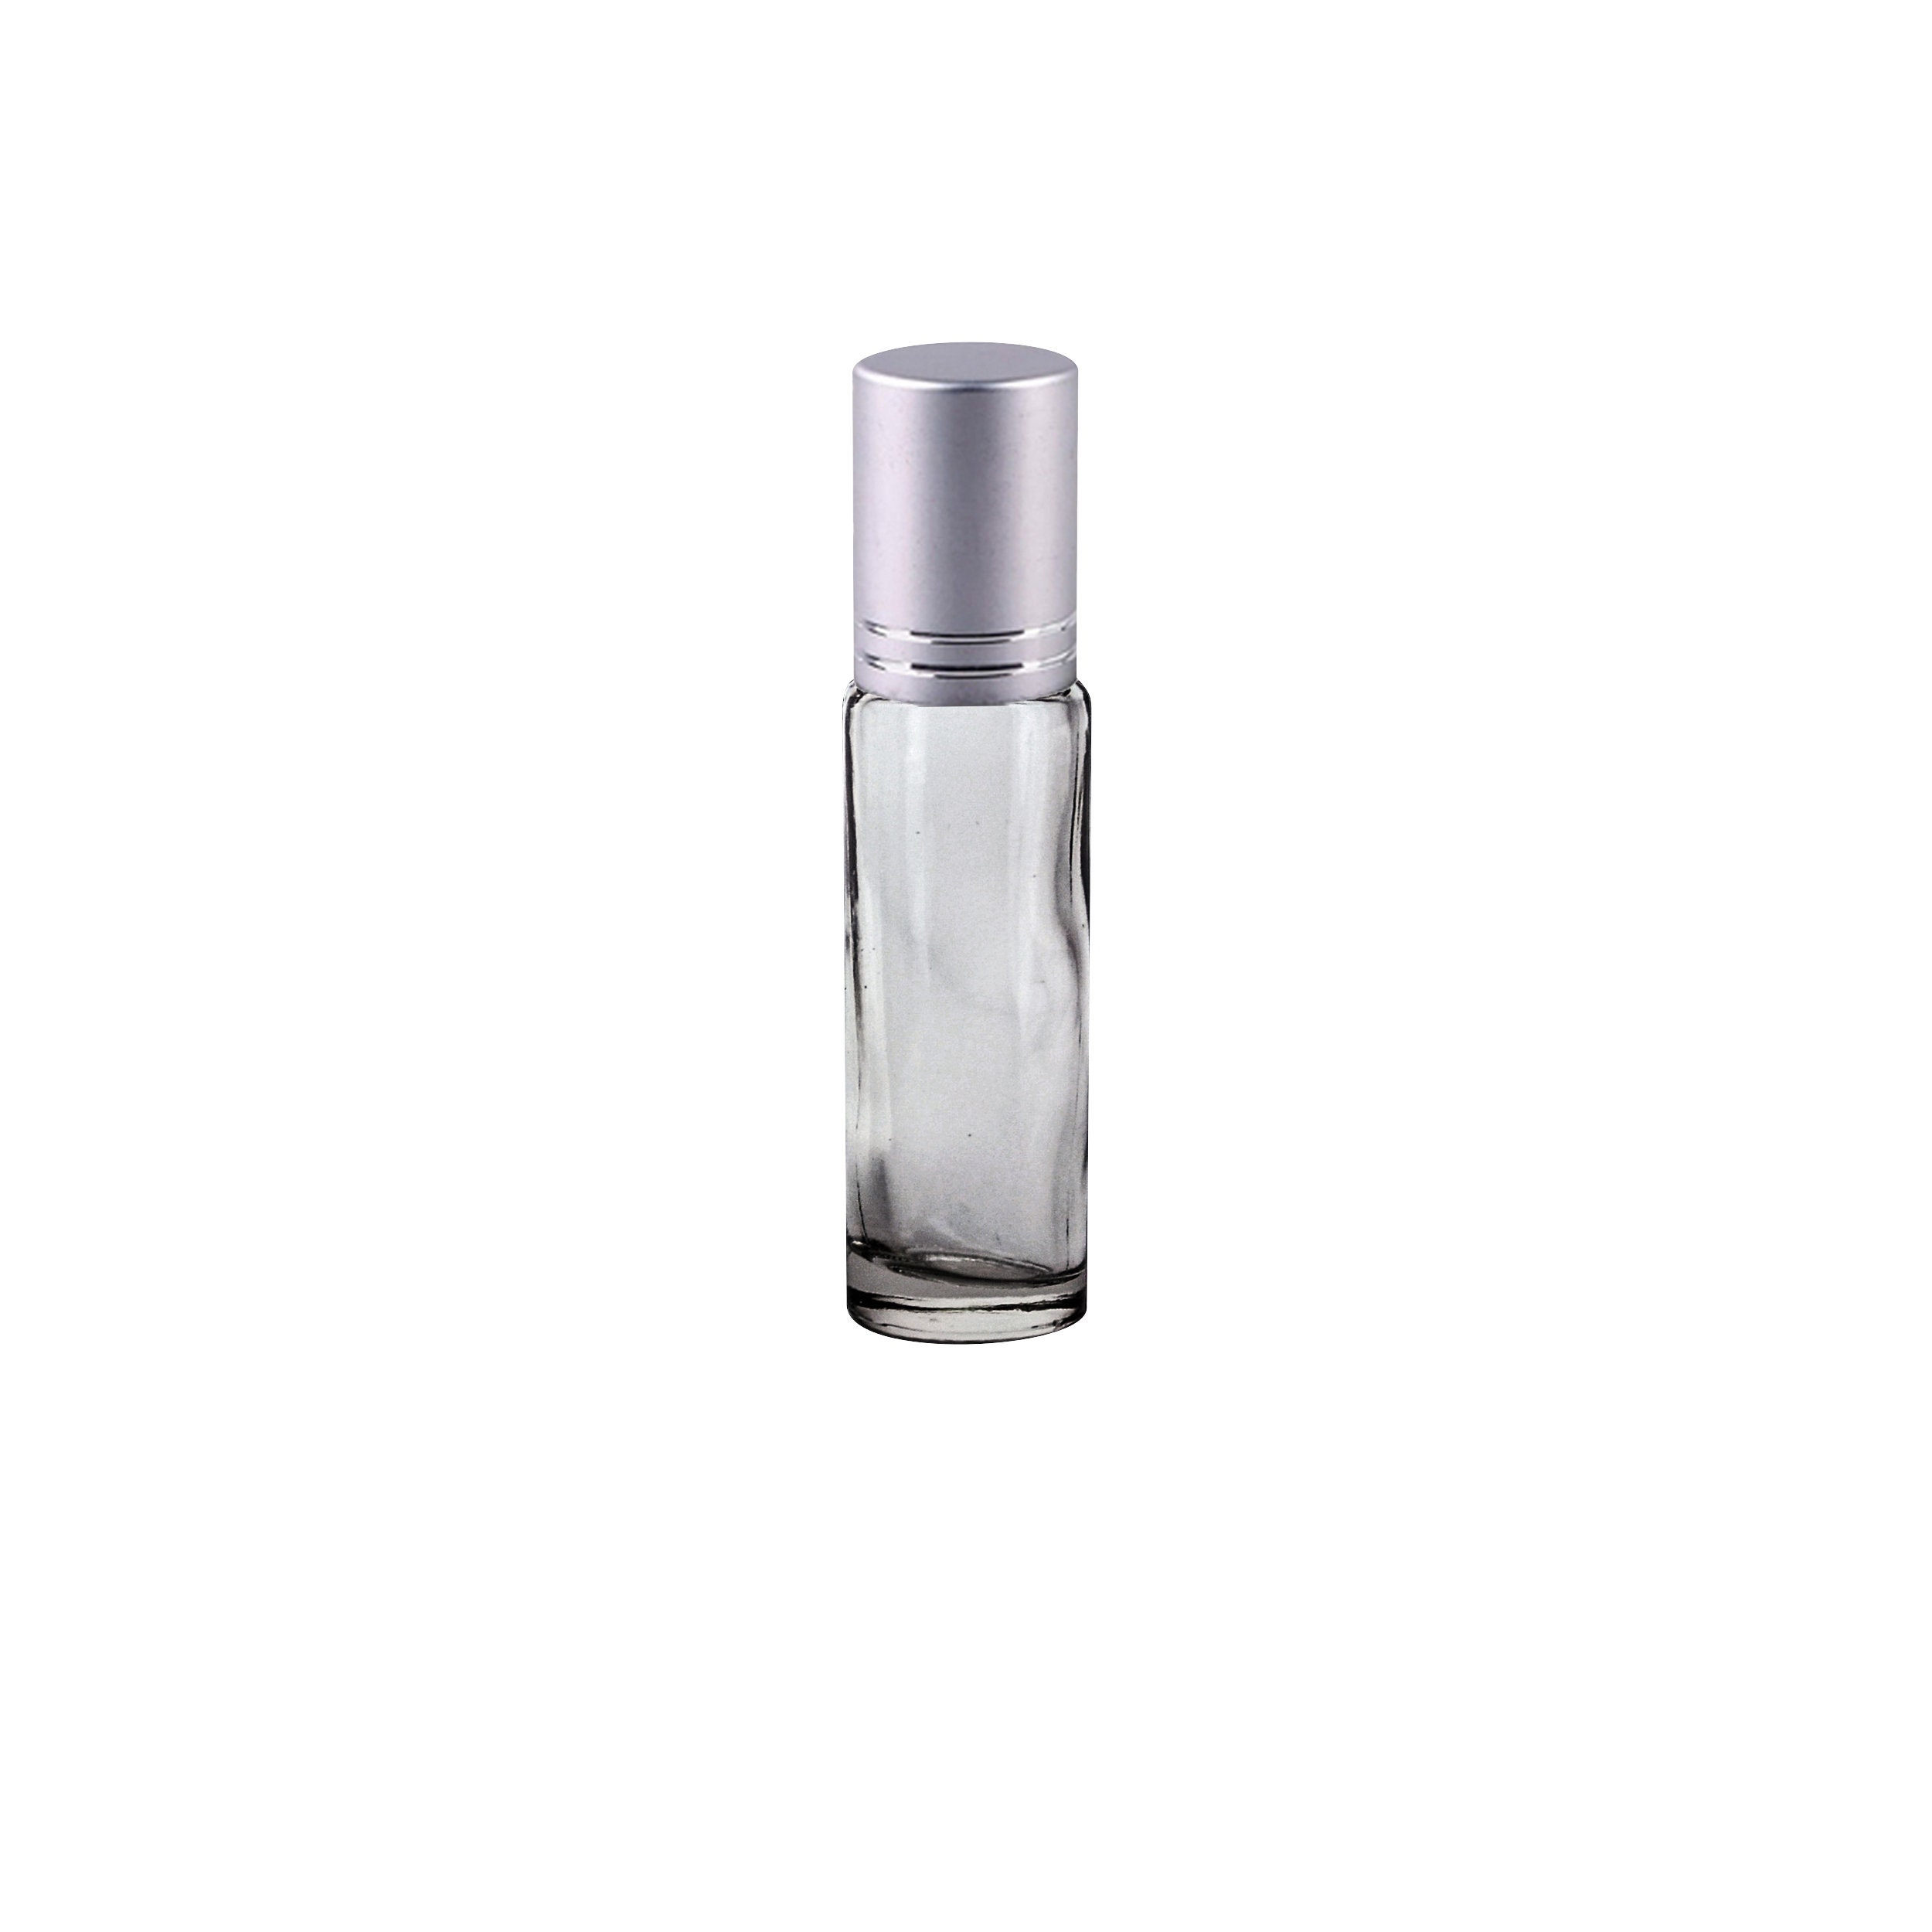 Premium Pure Parfum Oil Blend - Similar Base Notes & Fragrance Accords To Only The Brav For Men 10 Ml White Frosted Roller Bottle